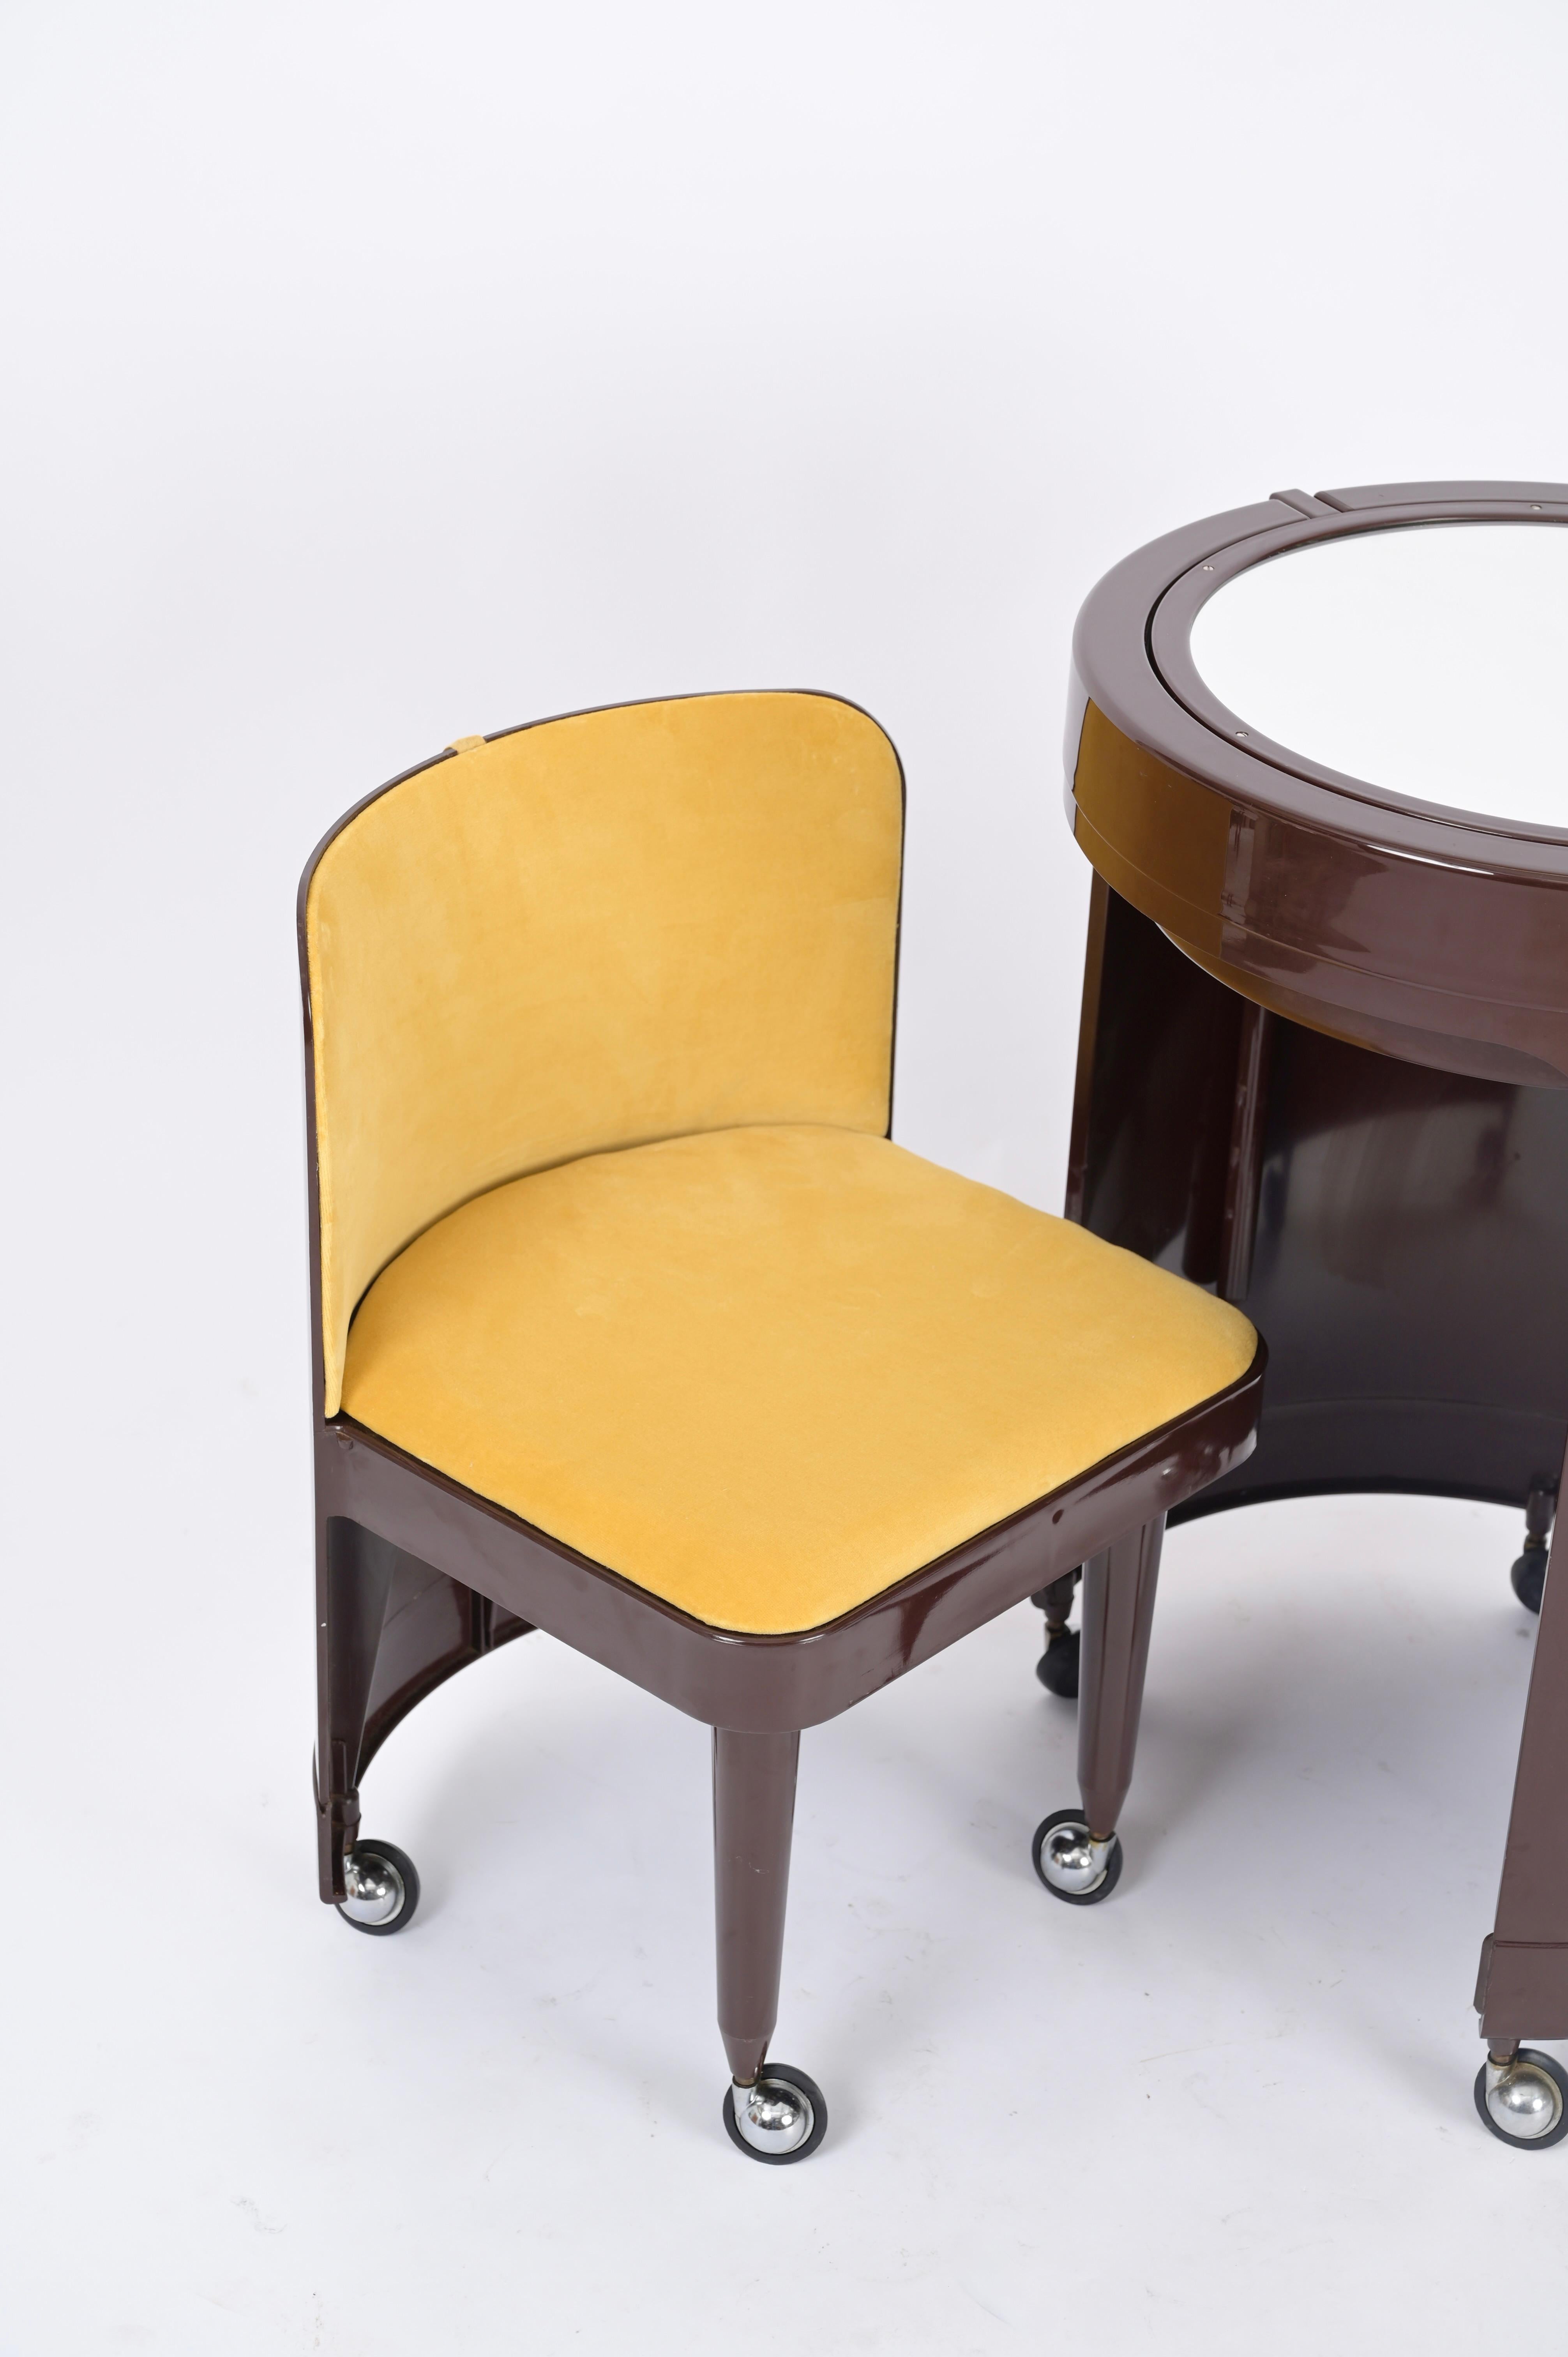 Studio Kastilia Silvi, Italian Brown Vanity Table with Yellow Seat, 1970s For Sale 6